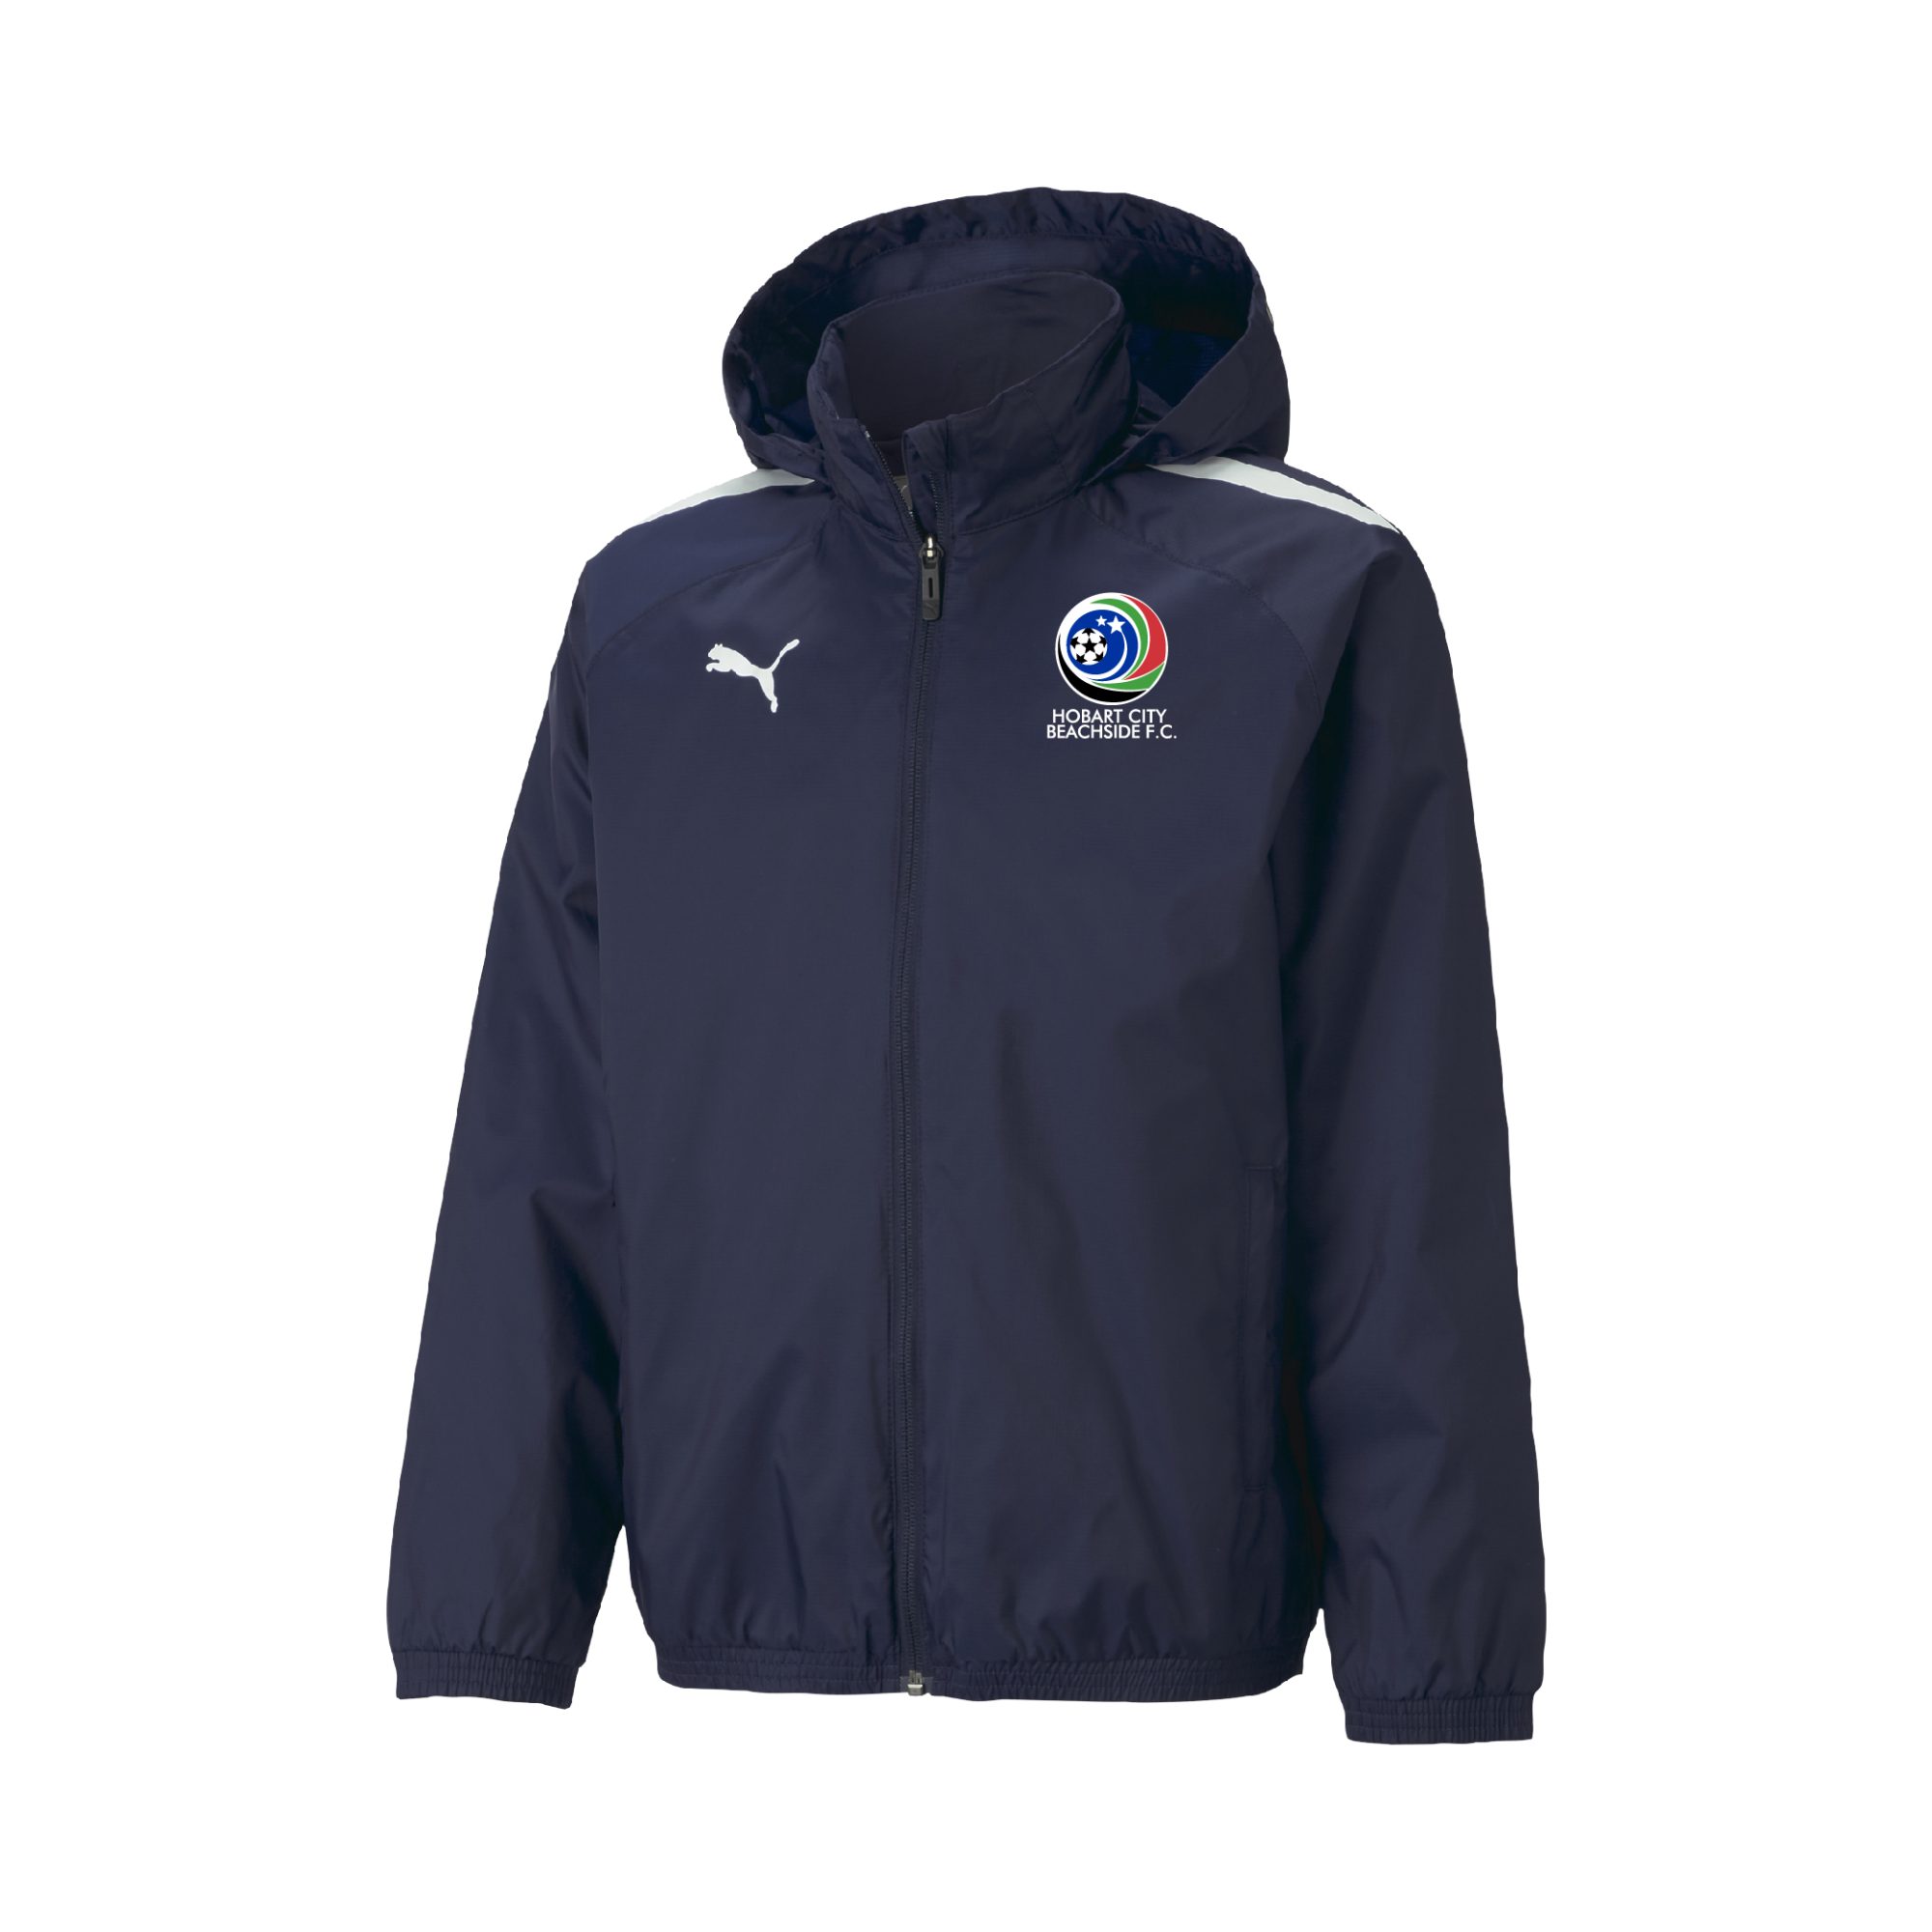 Puma team liga all weather jacket navy with logo - Sportsclique Shop